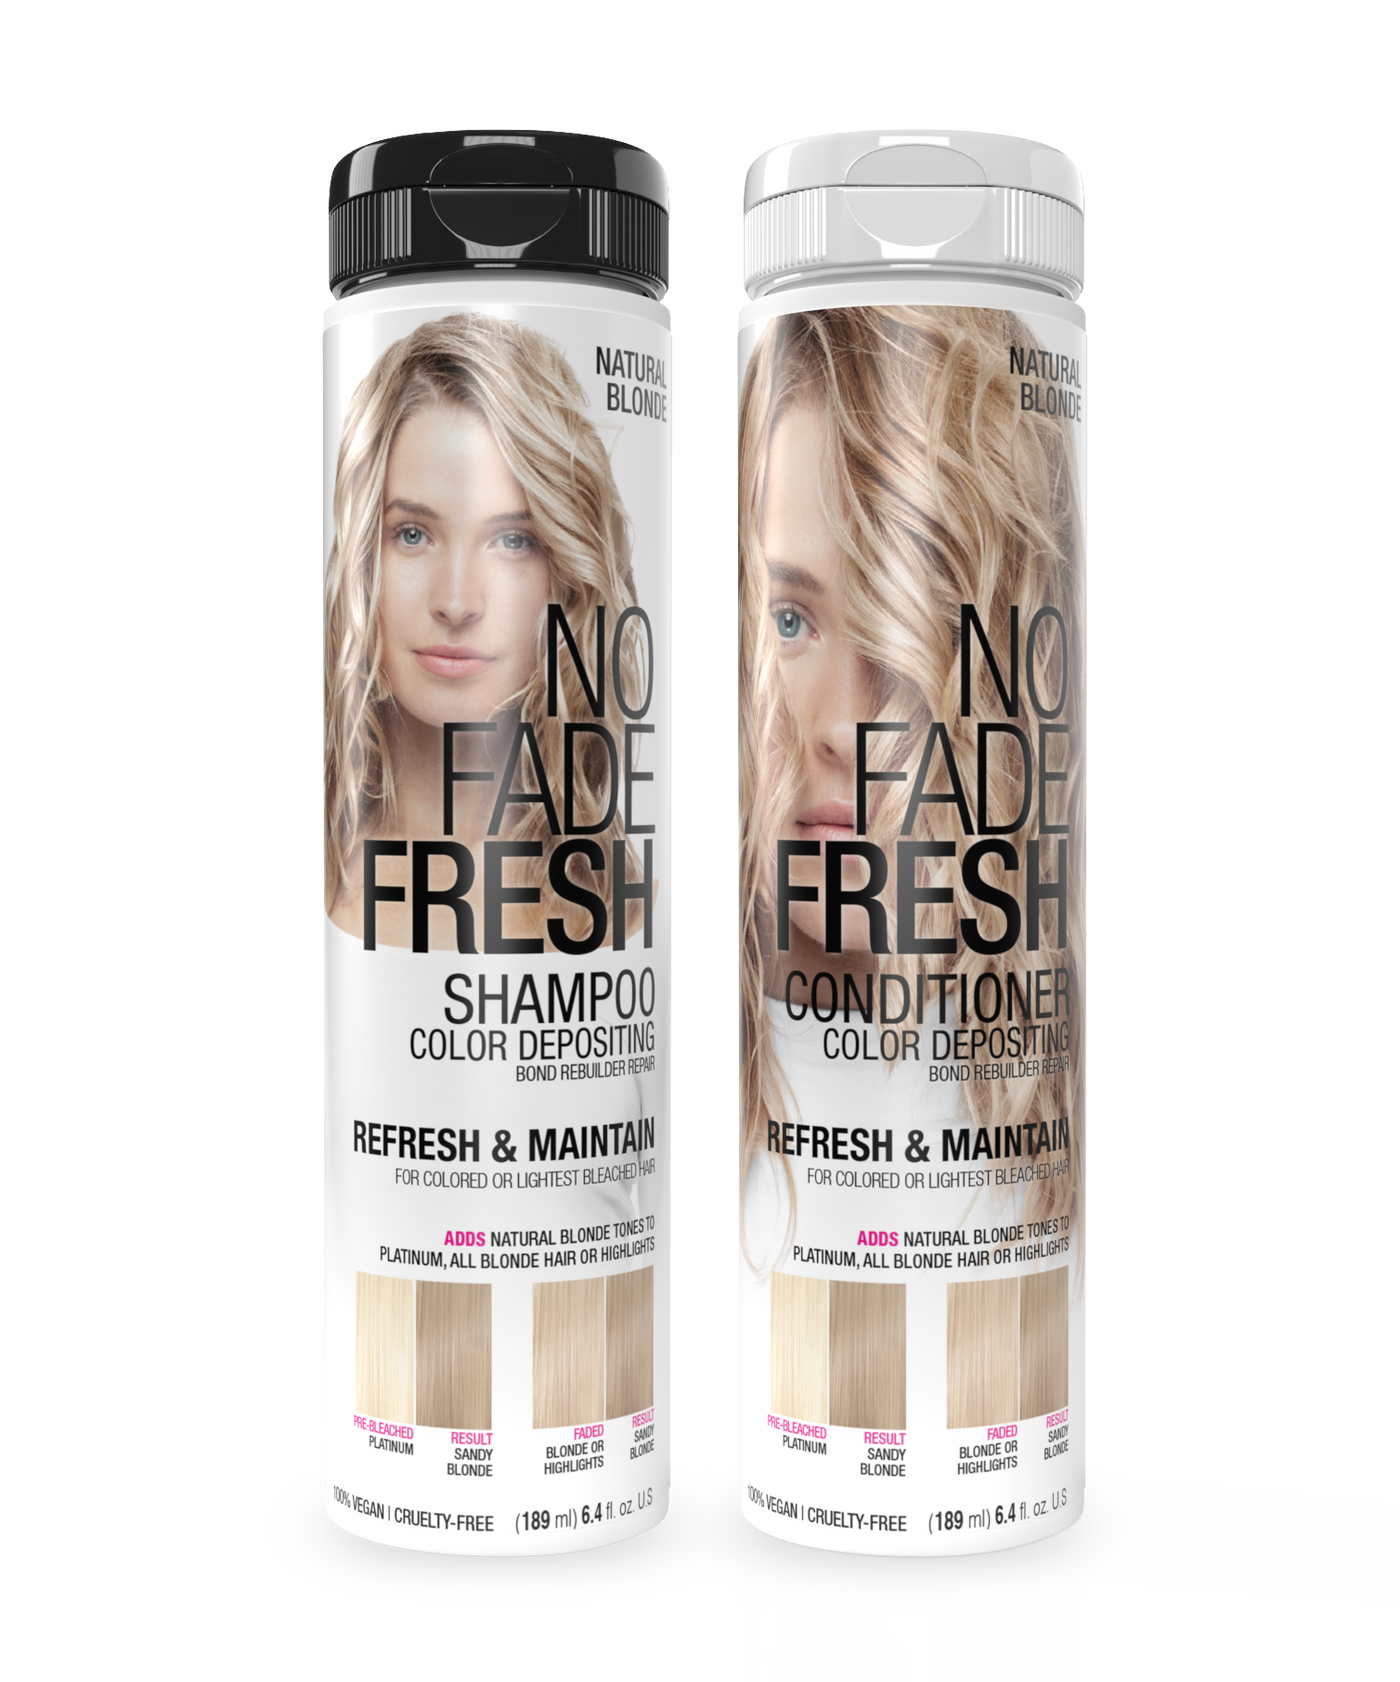 No Fade Fresh Semi Permanent Colour Depositing Shampoo & Conditioner Duo Natural Blonde 189ml